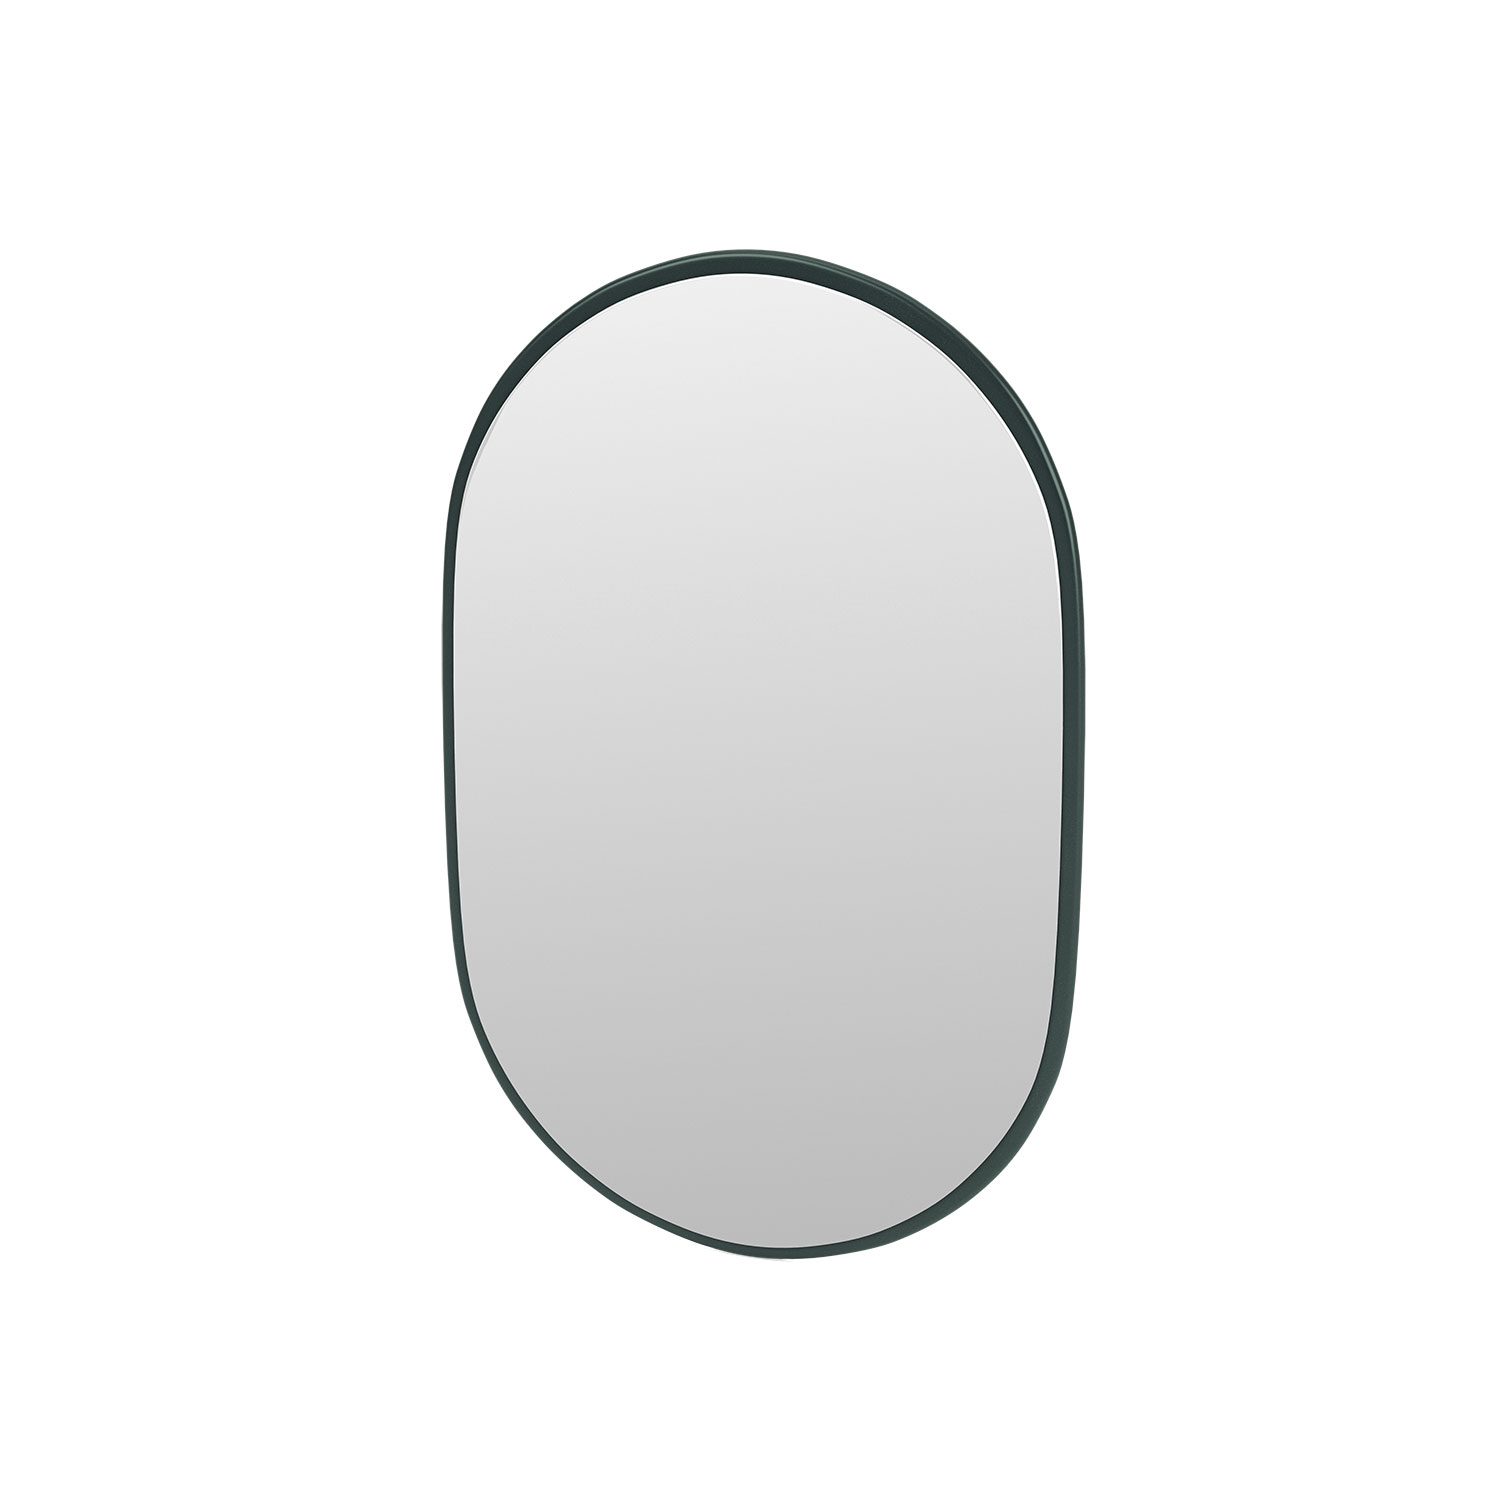 LOOK oval mirror, Black Jade